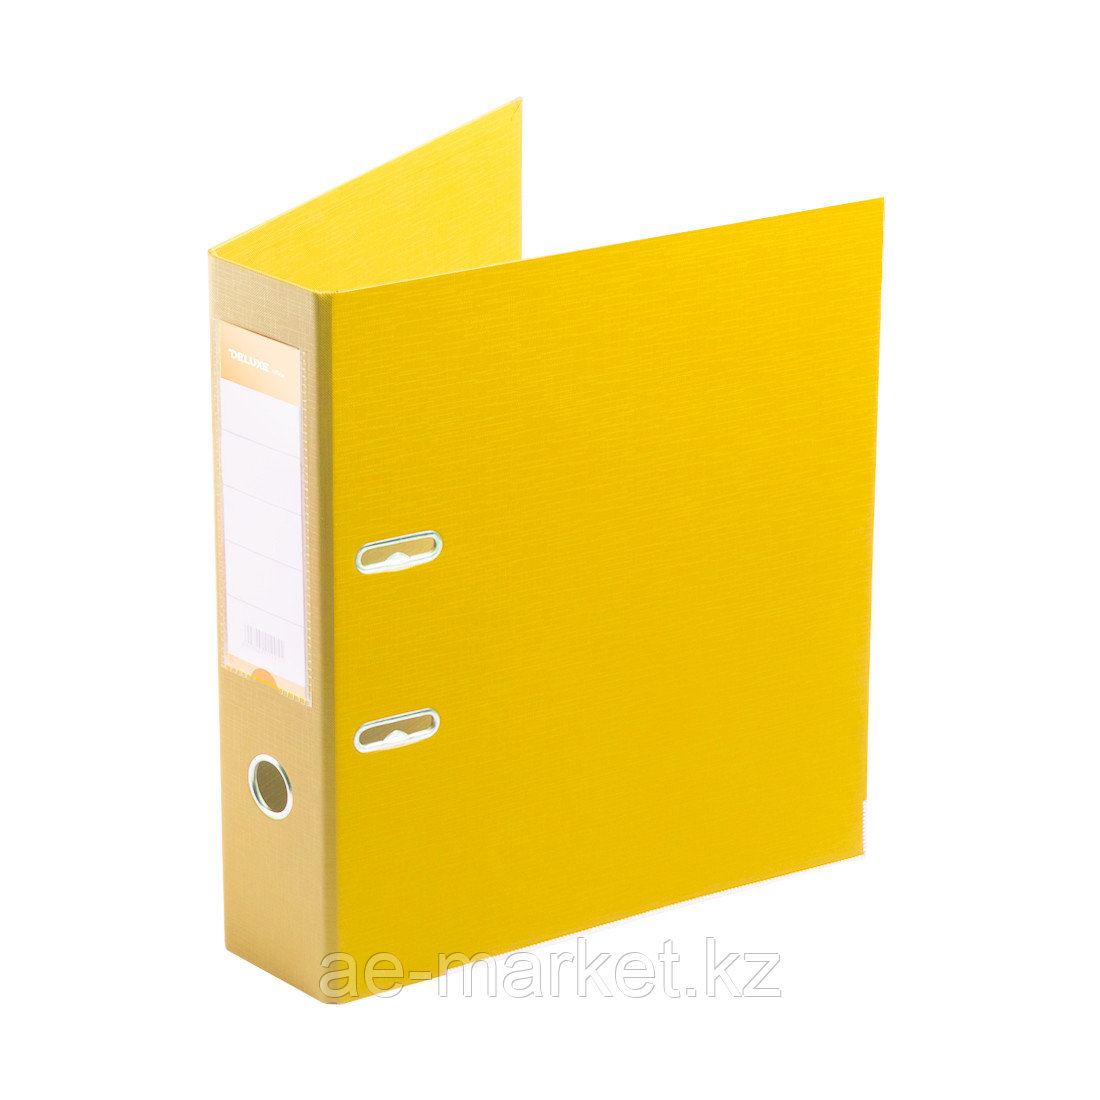 Папка-регистратор Deluxe с арочным механизмом, Office 3-YW5 (3" YELLOW), А4, 70 мм, желтый, фото 1